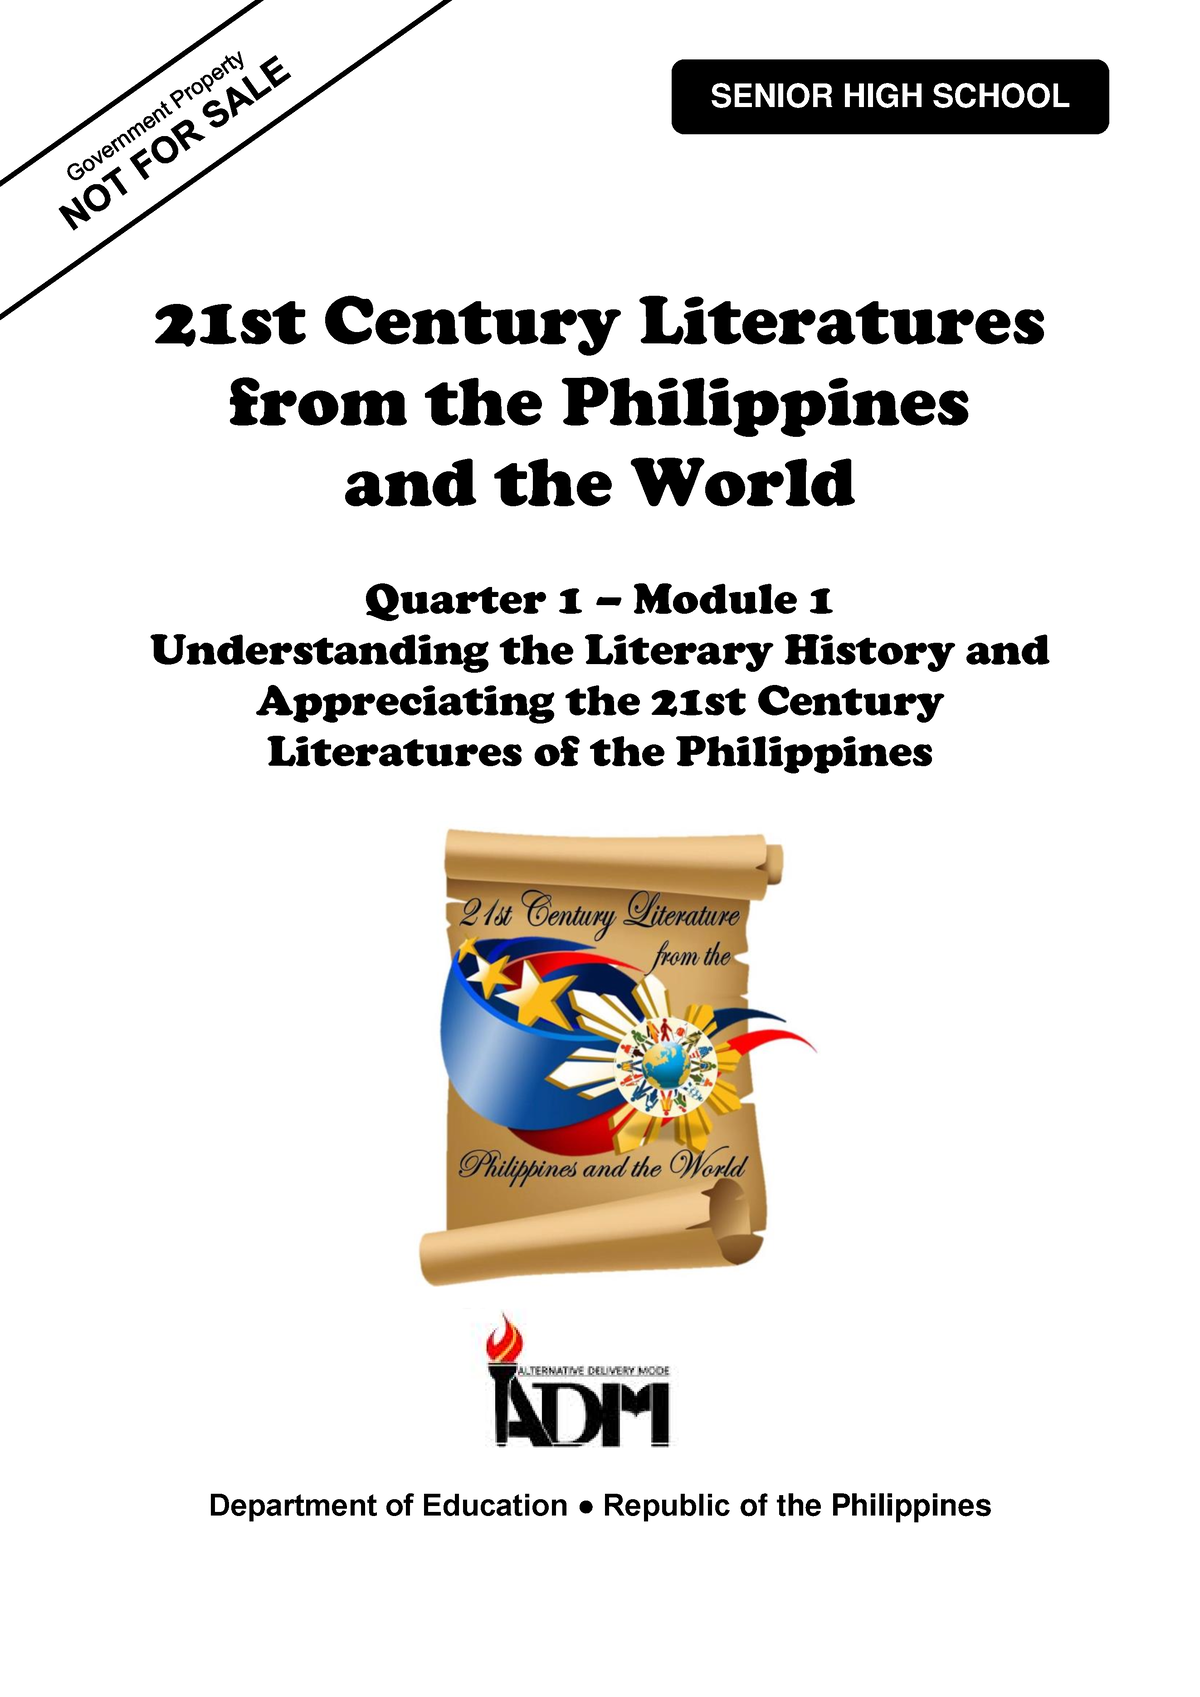 21ST century literature module 1 - 21st Century Literatures from the ...